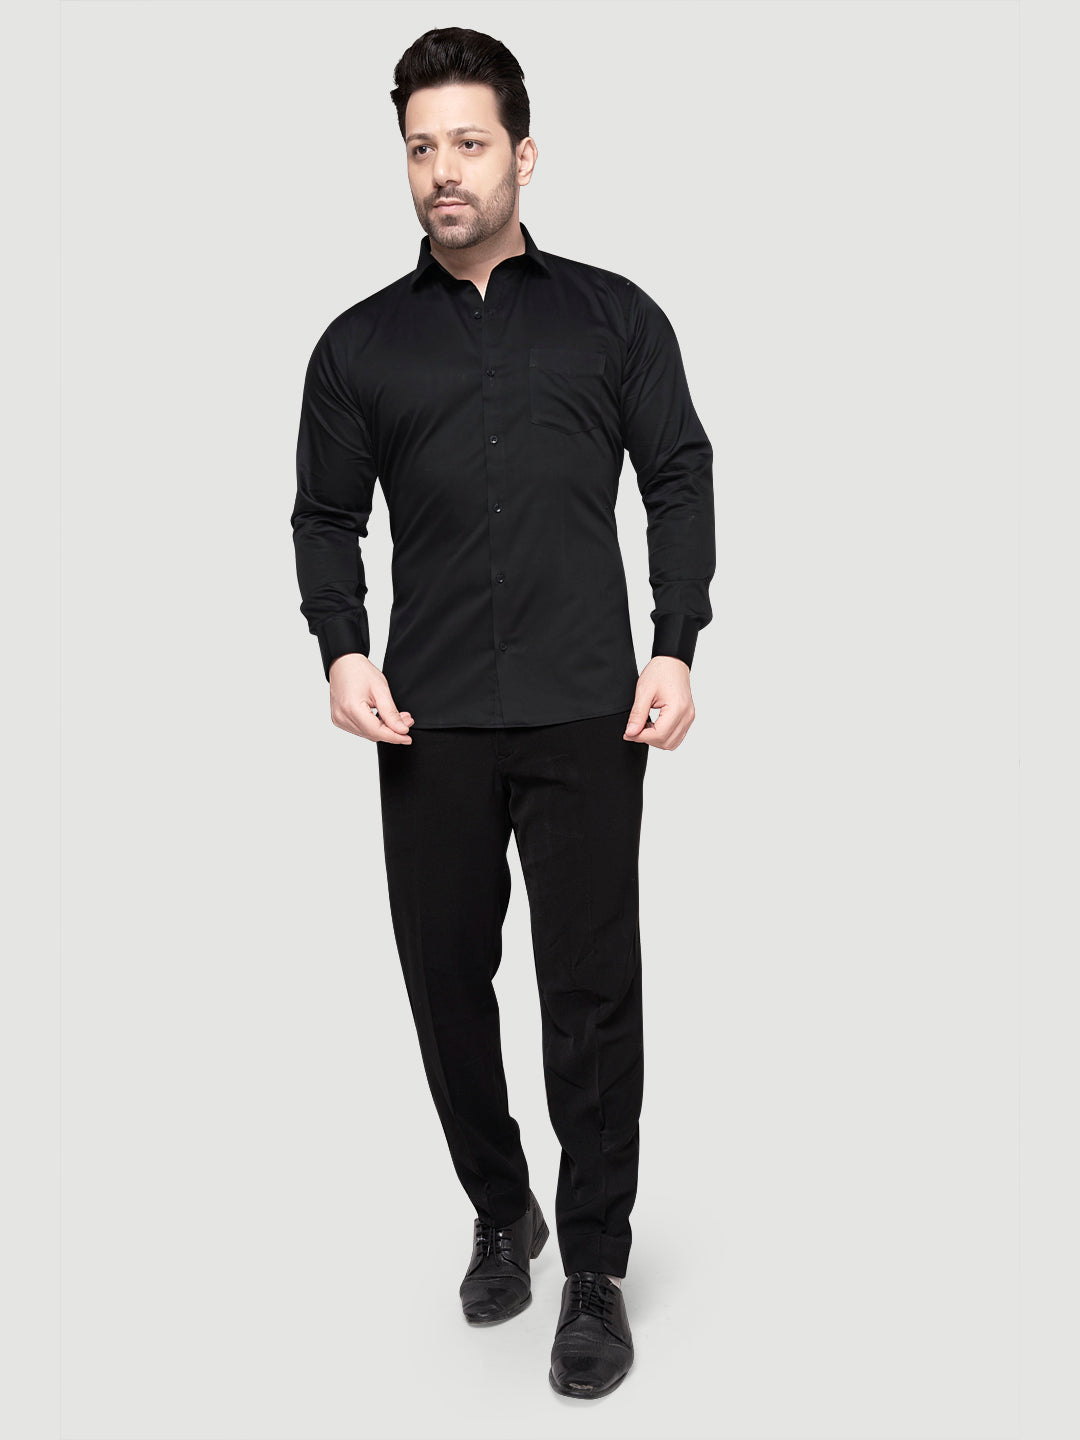 Black & White Men's Formal Cufflink Shirt White-Premium-Black